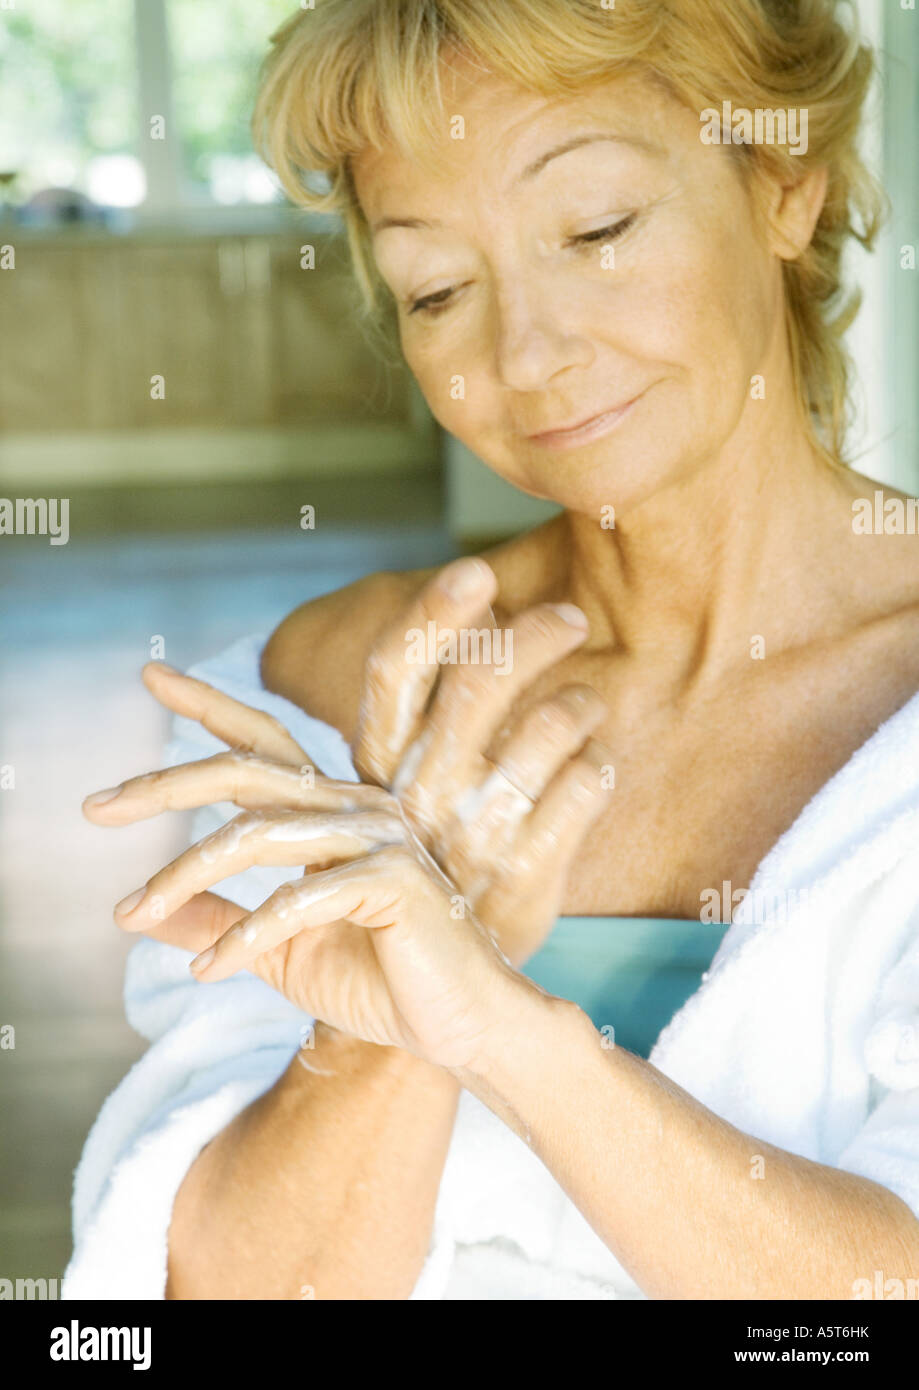 Senior woman applying moisturizer to hands Stock Photo